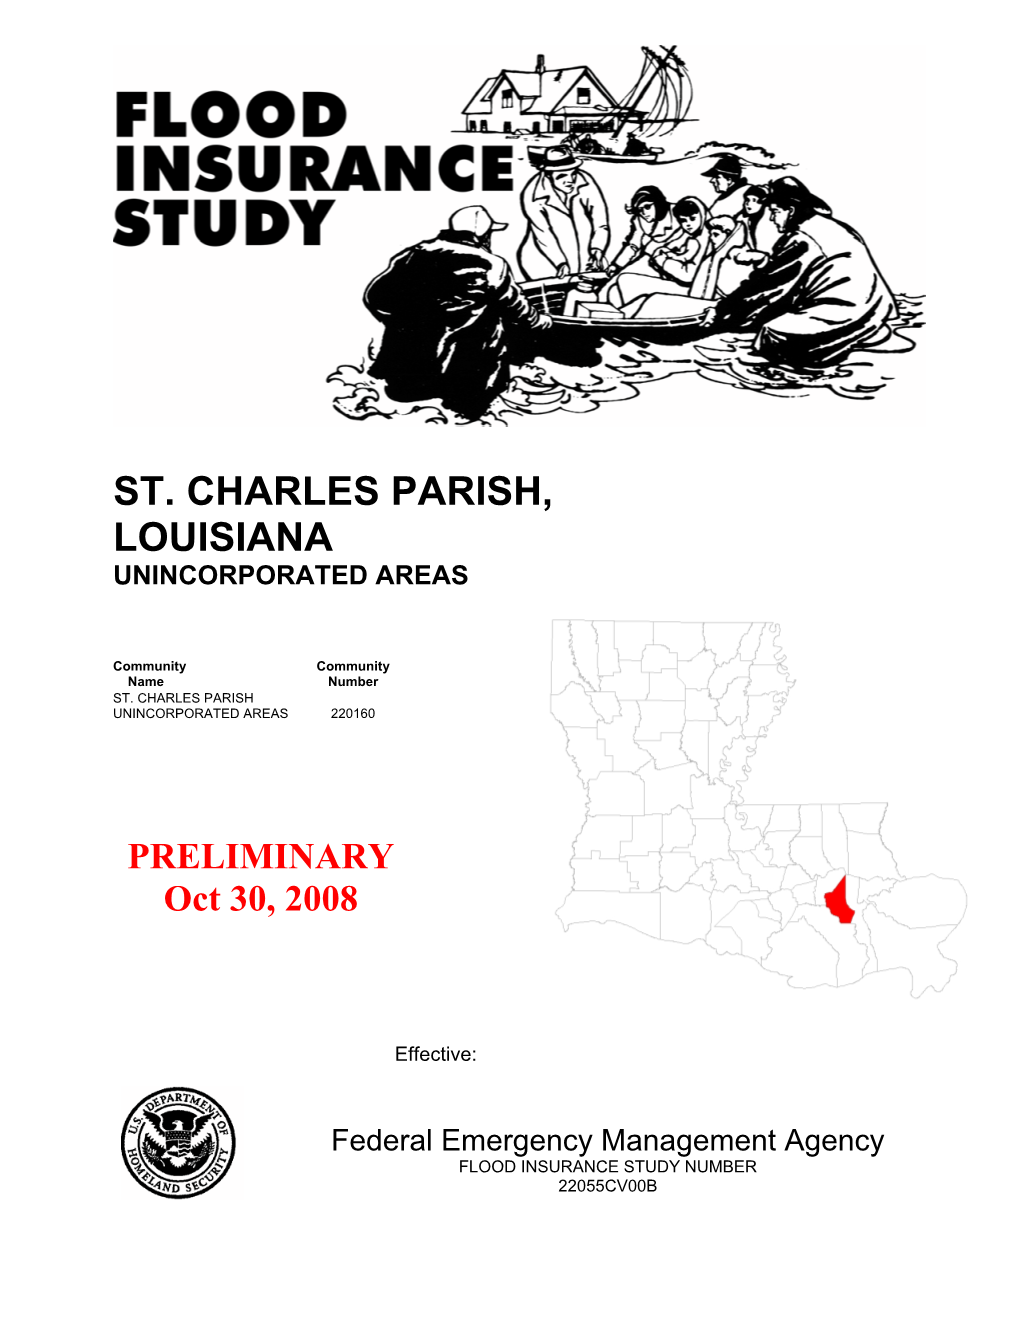 FEMA Flood Insurance Study